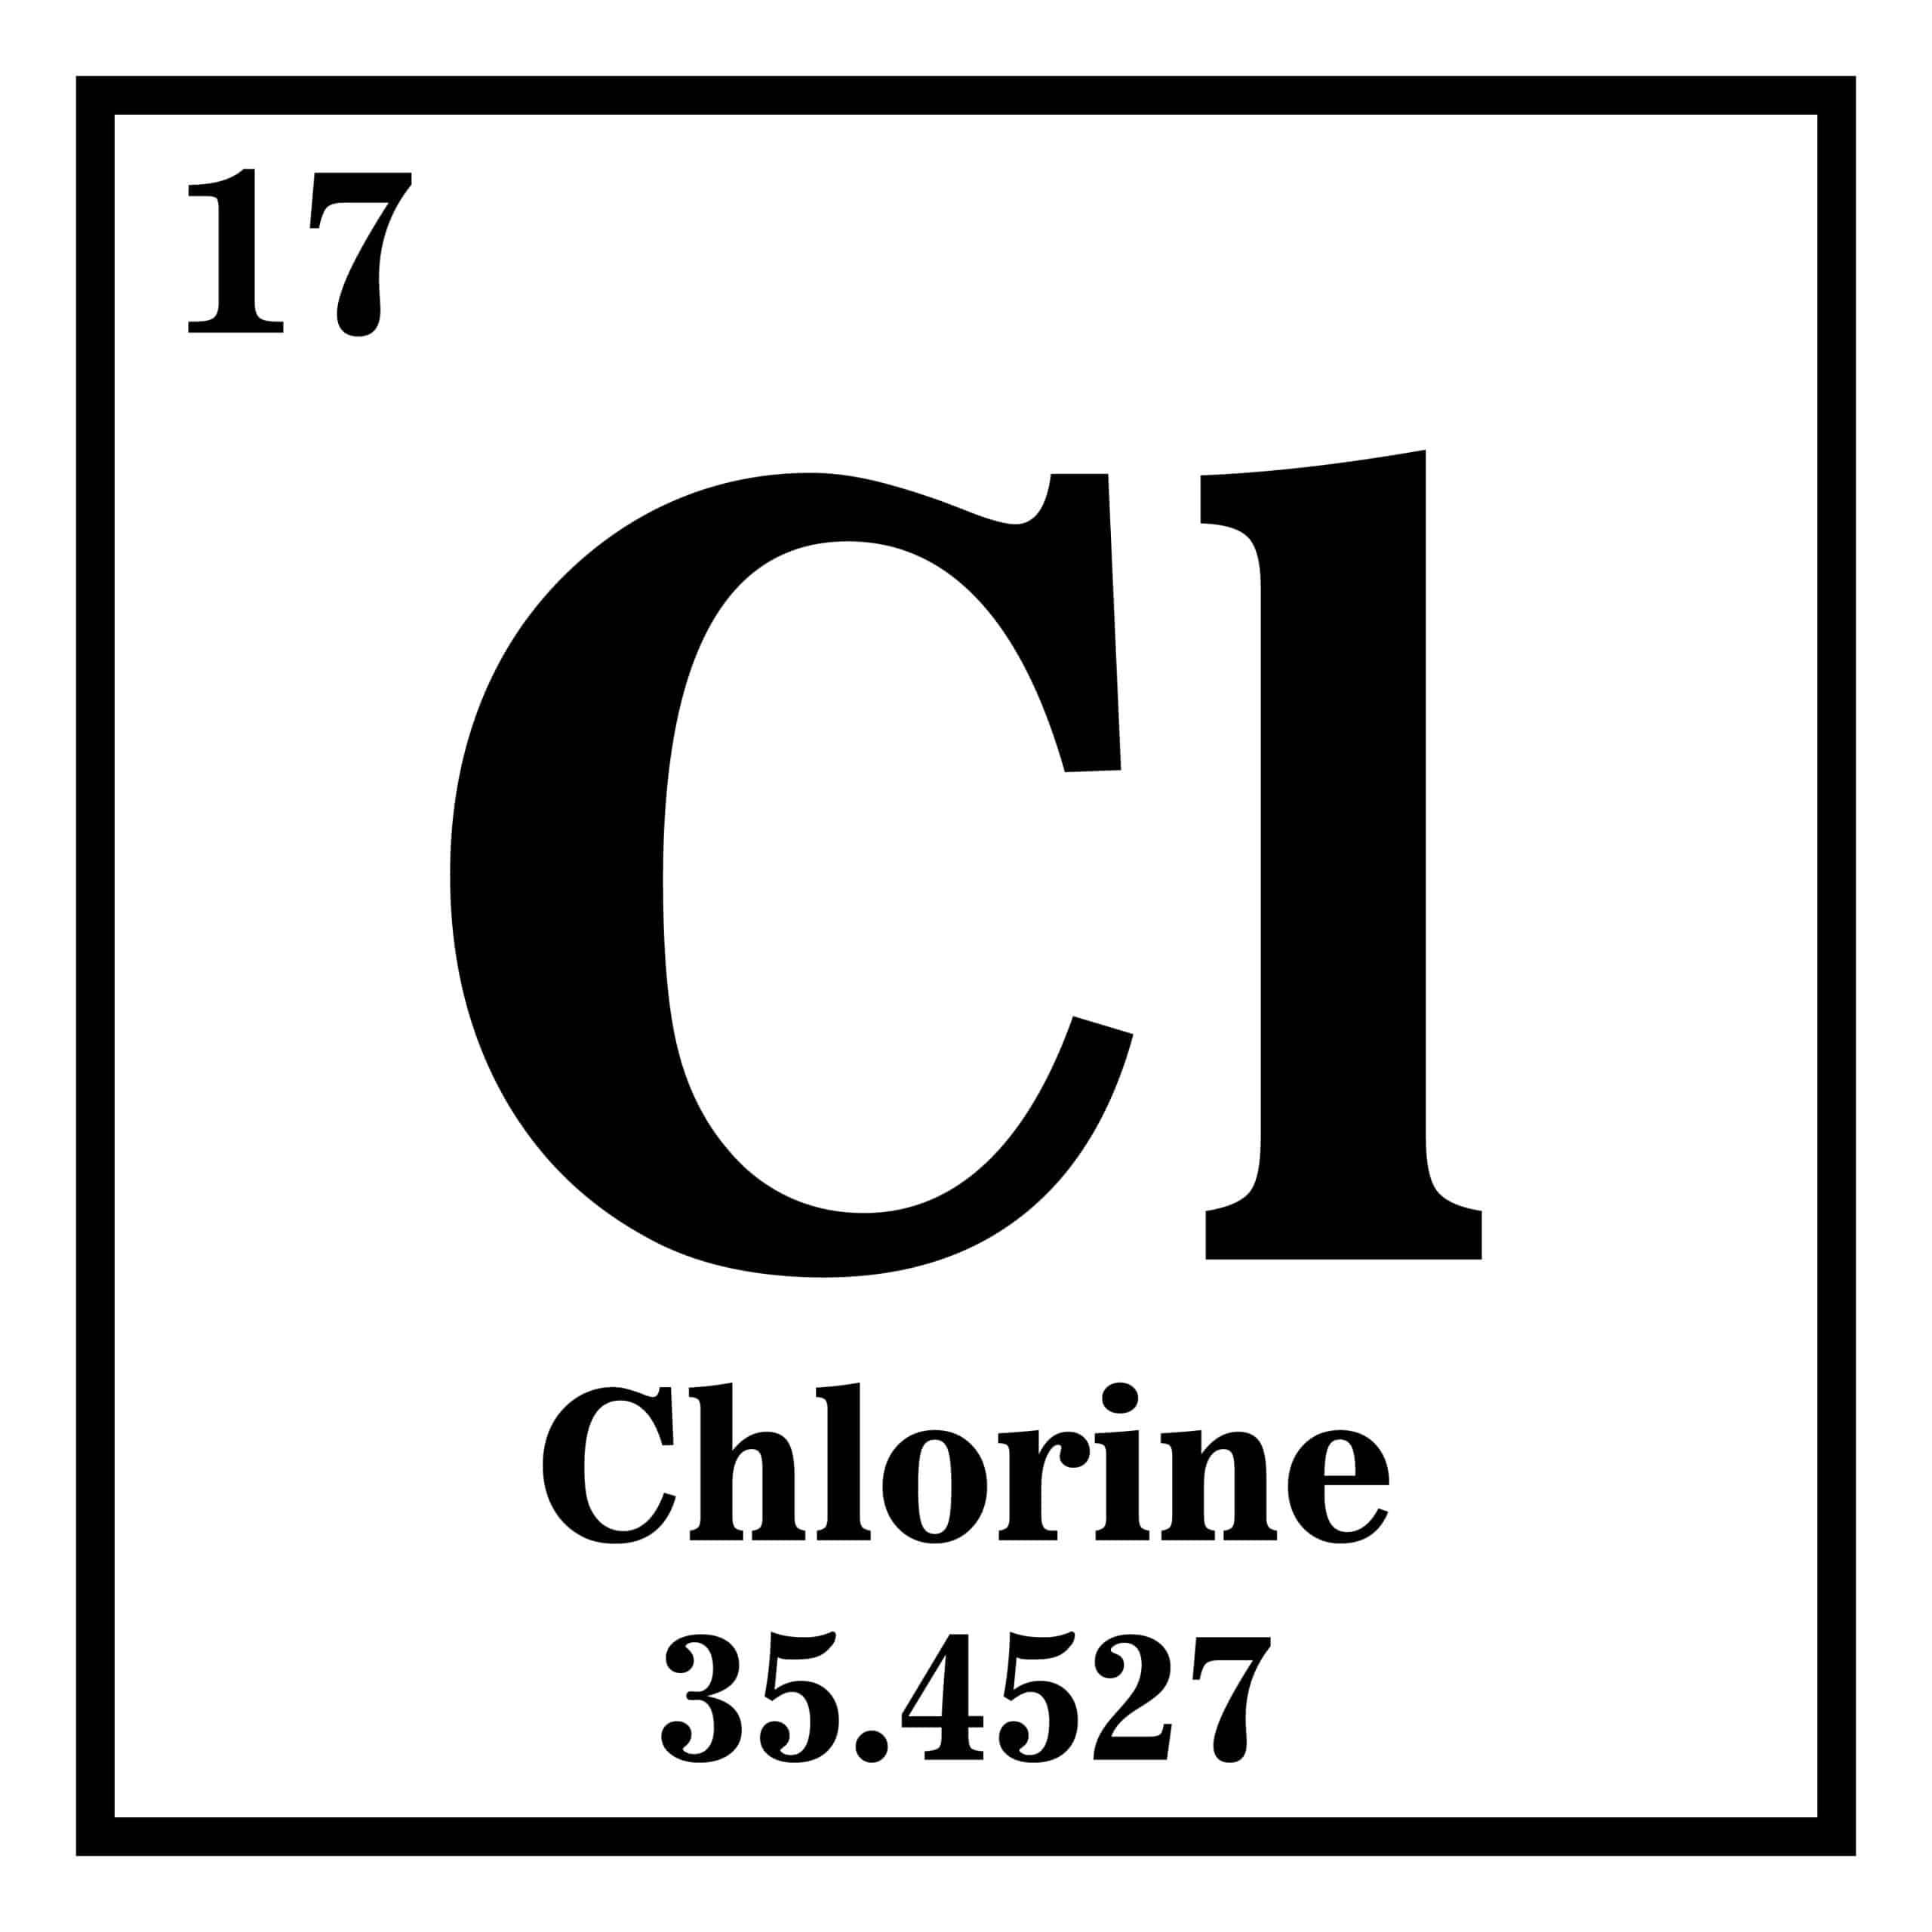 Chlorine periodic element table image